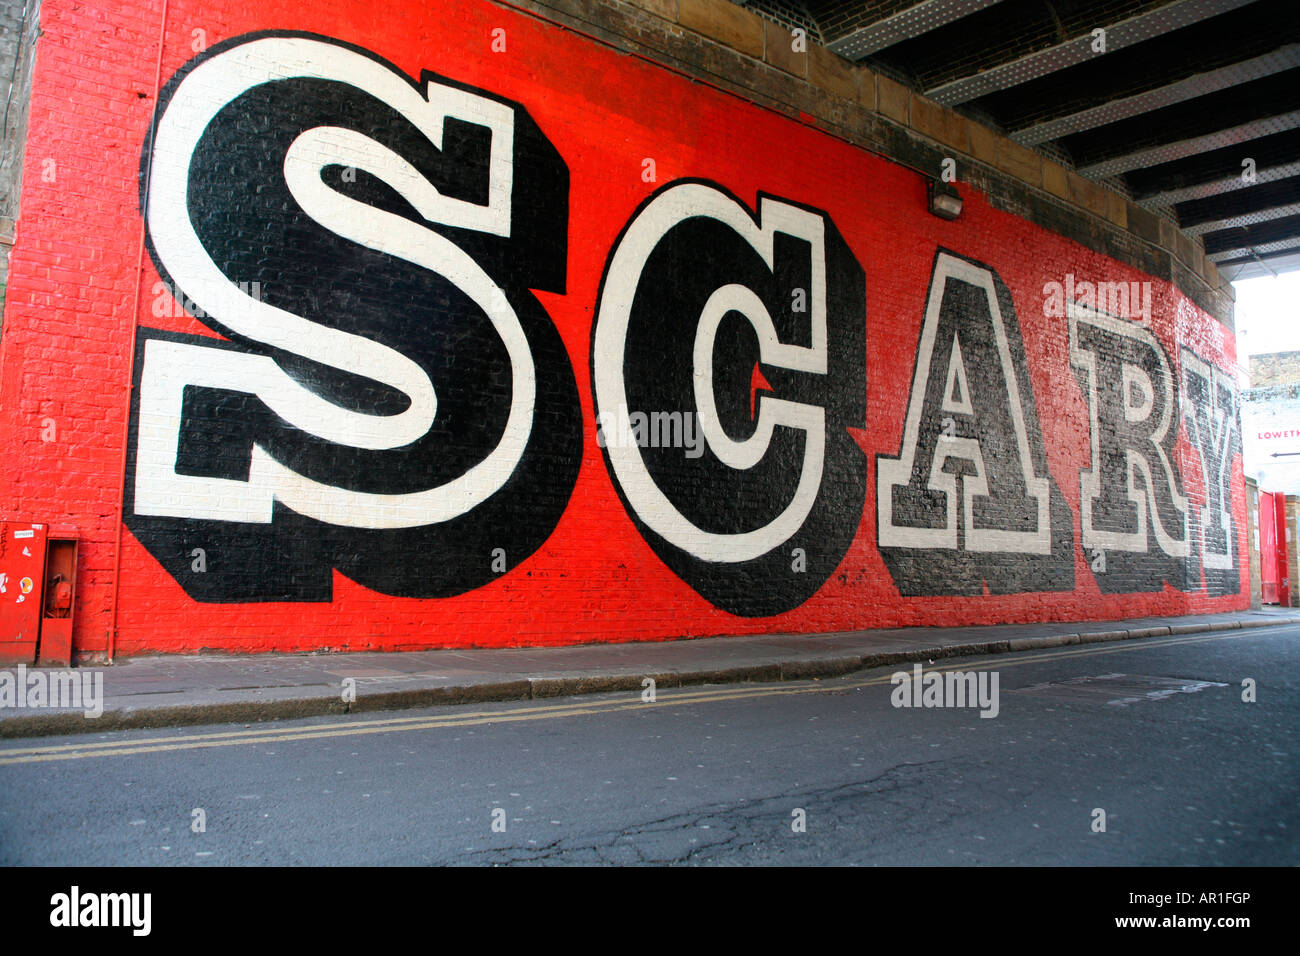 Eine SCARY mural on wall near Cargo, Shoreditch, London Stock Photo